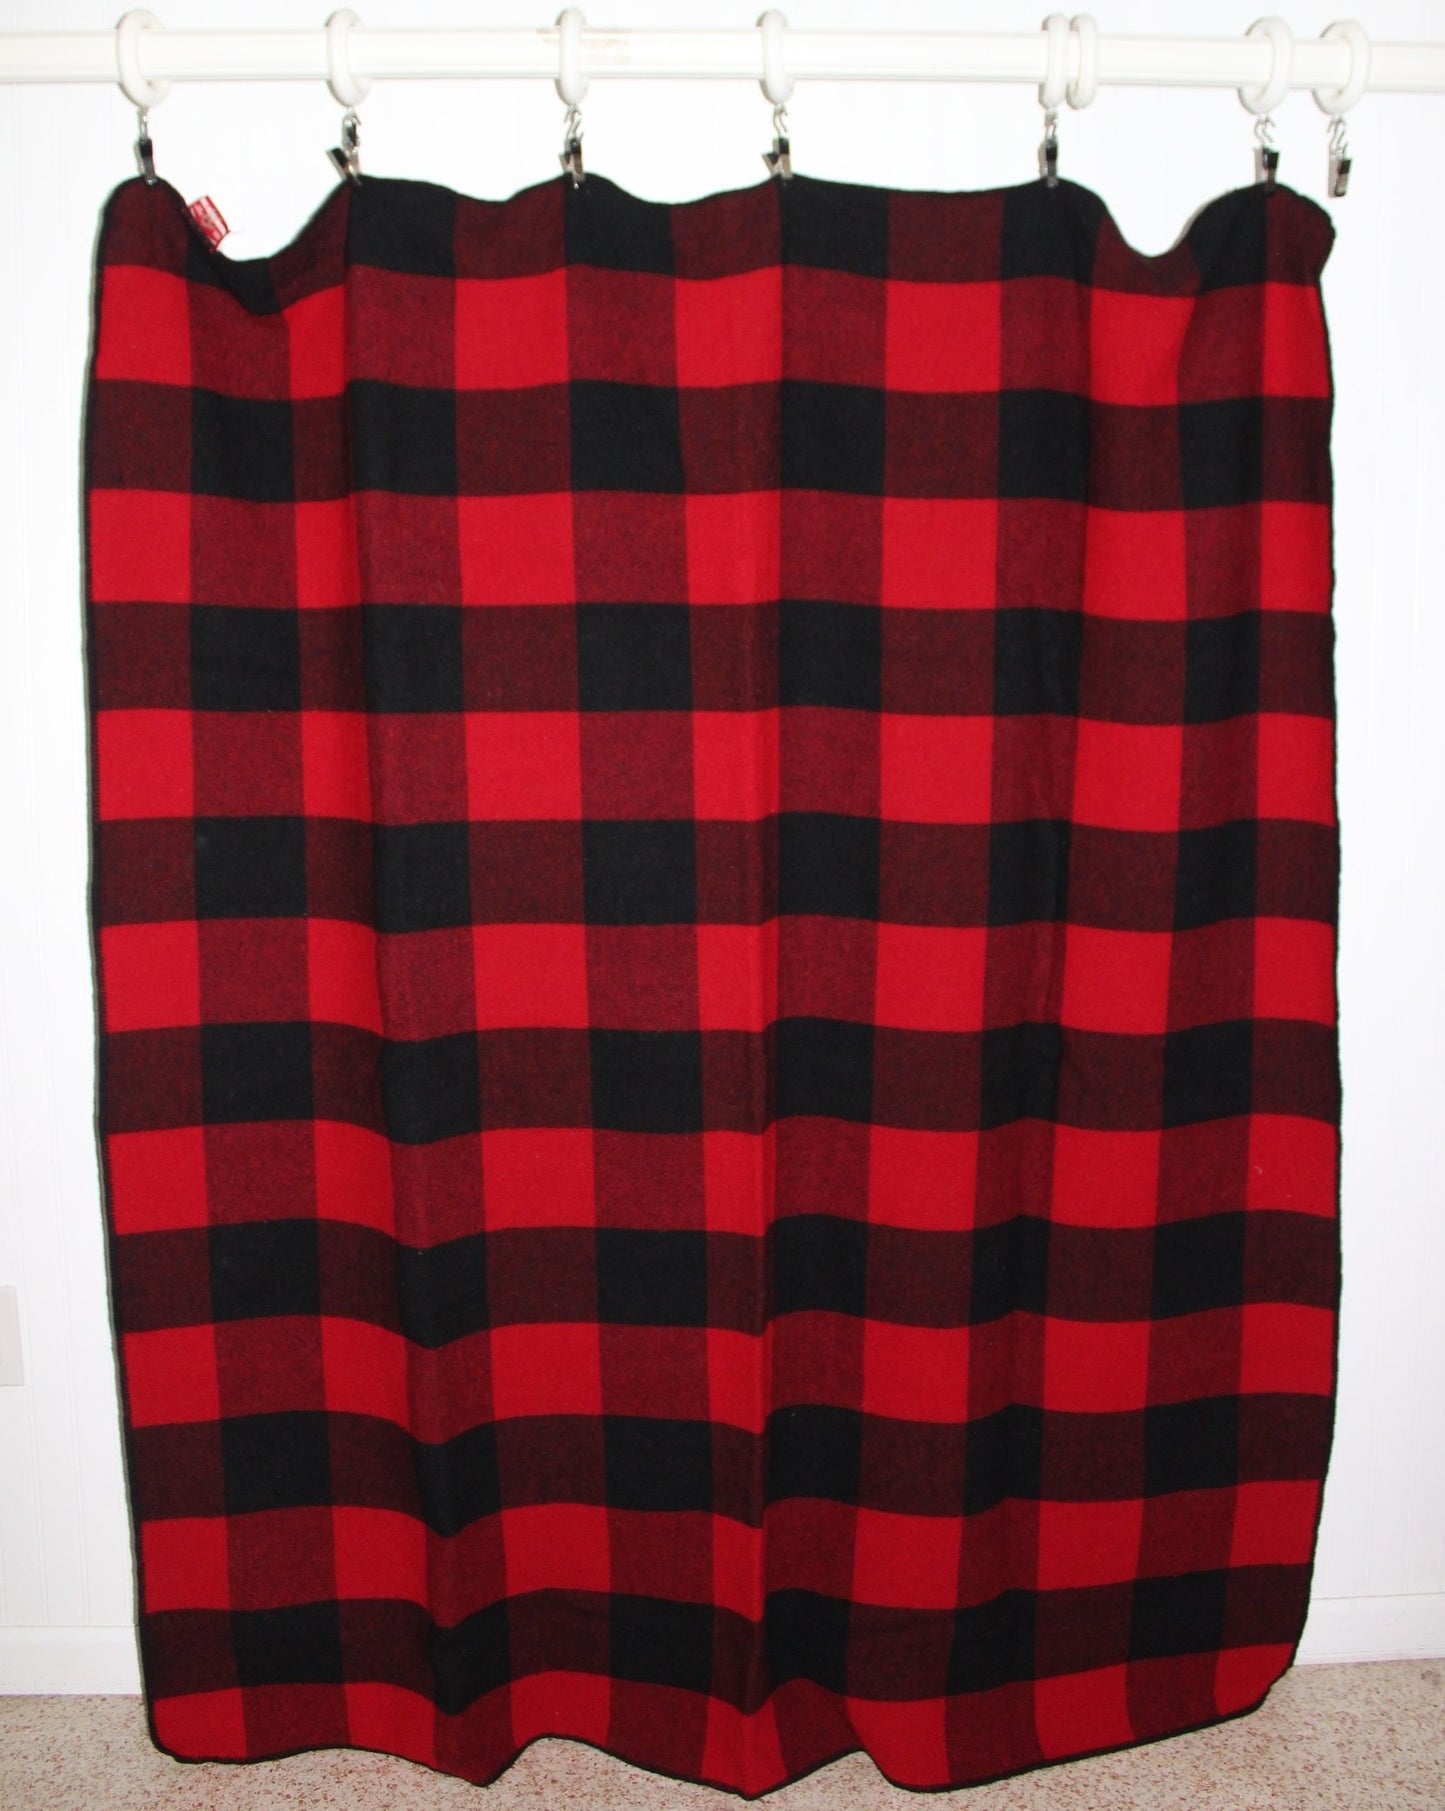 Marlboro Blanket Buffalo Plaid  58" X 70" Black Red Wool Nylon Blend USA heavy